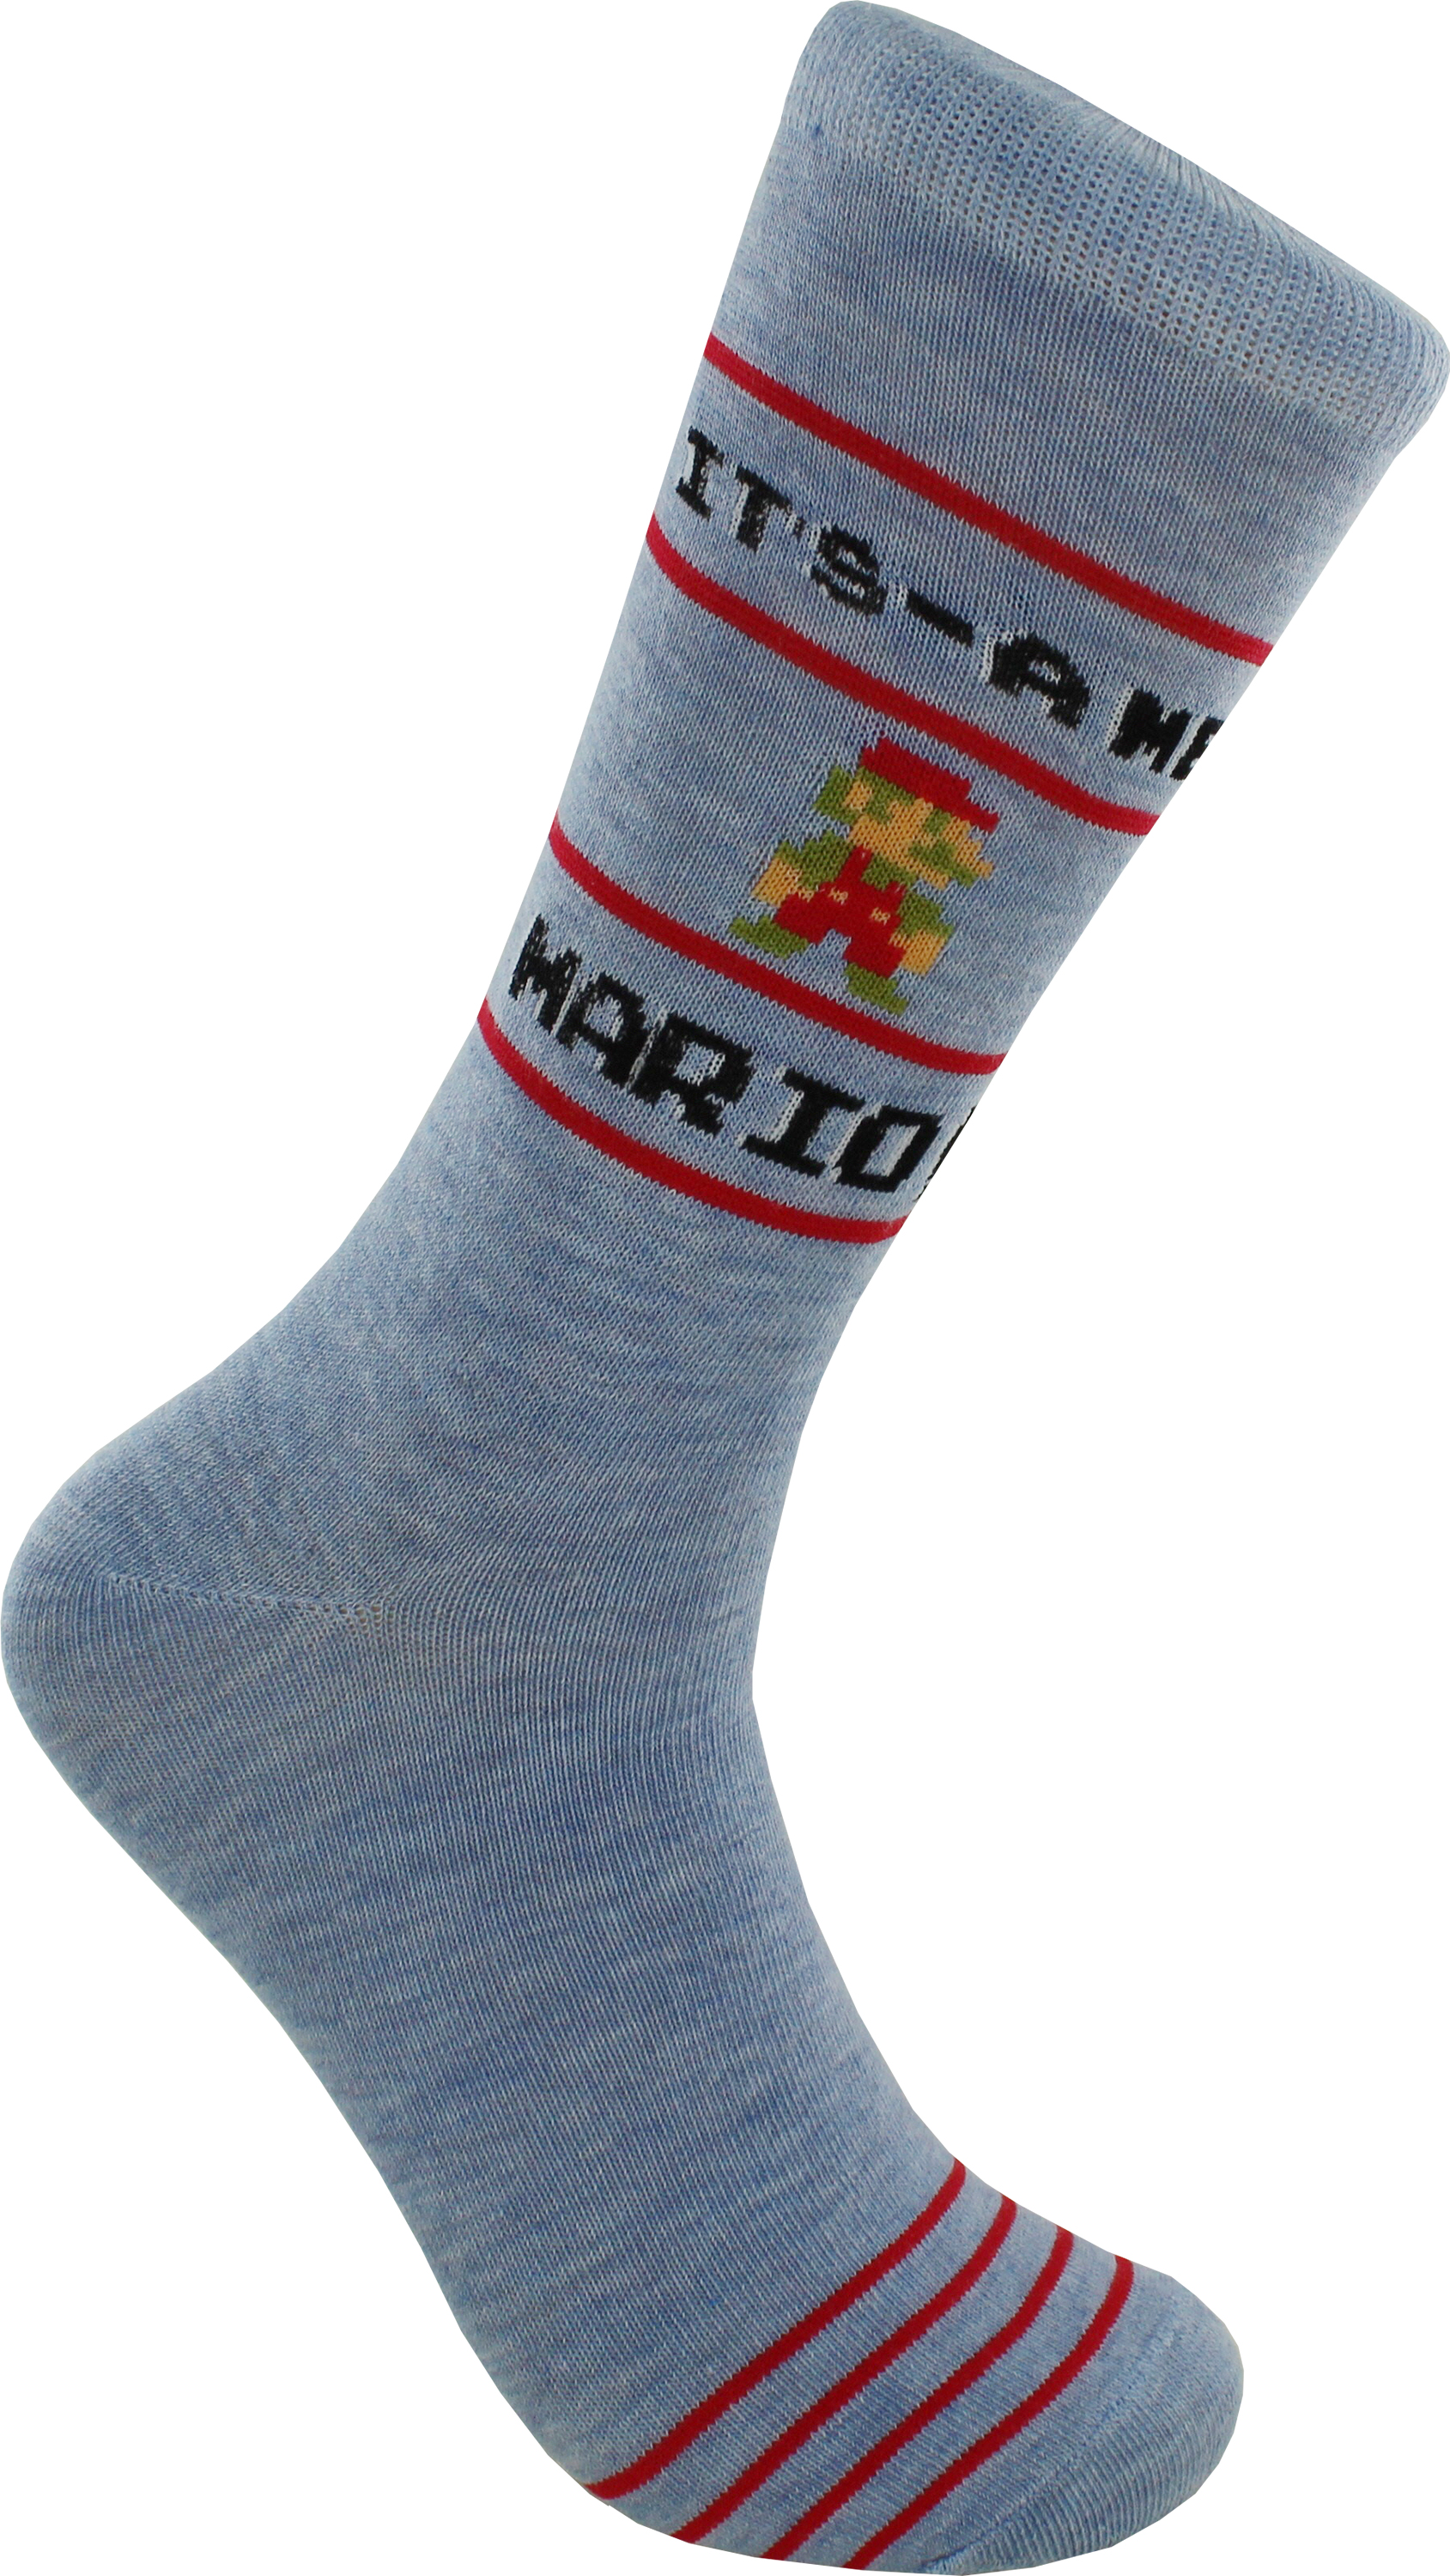 High Point Design Nintendo It's a-me, Mario! Men's Crew Socks, 2-Pack, Shoe Size 6.5-12